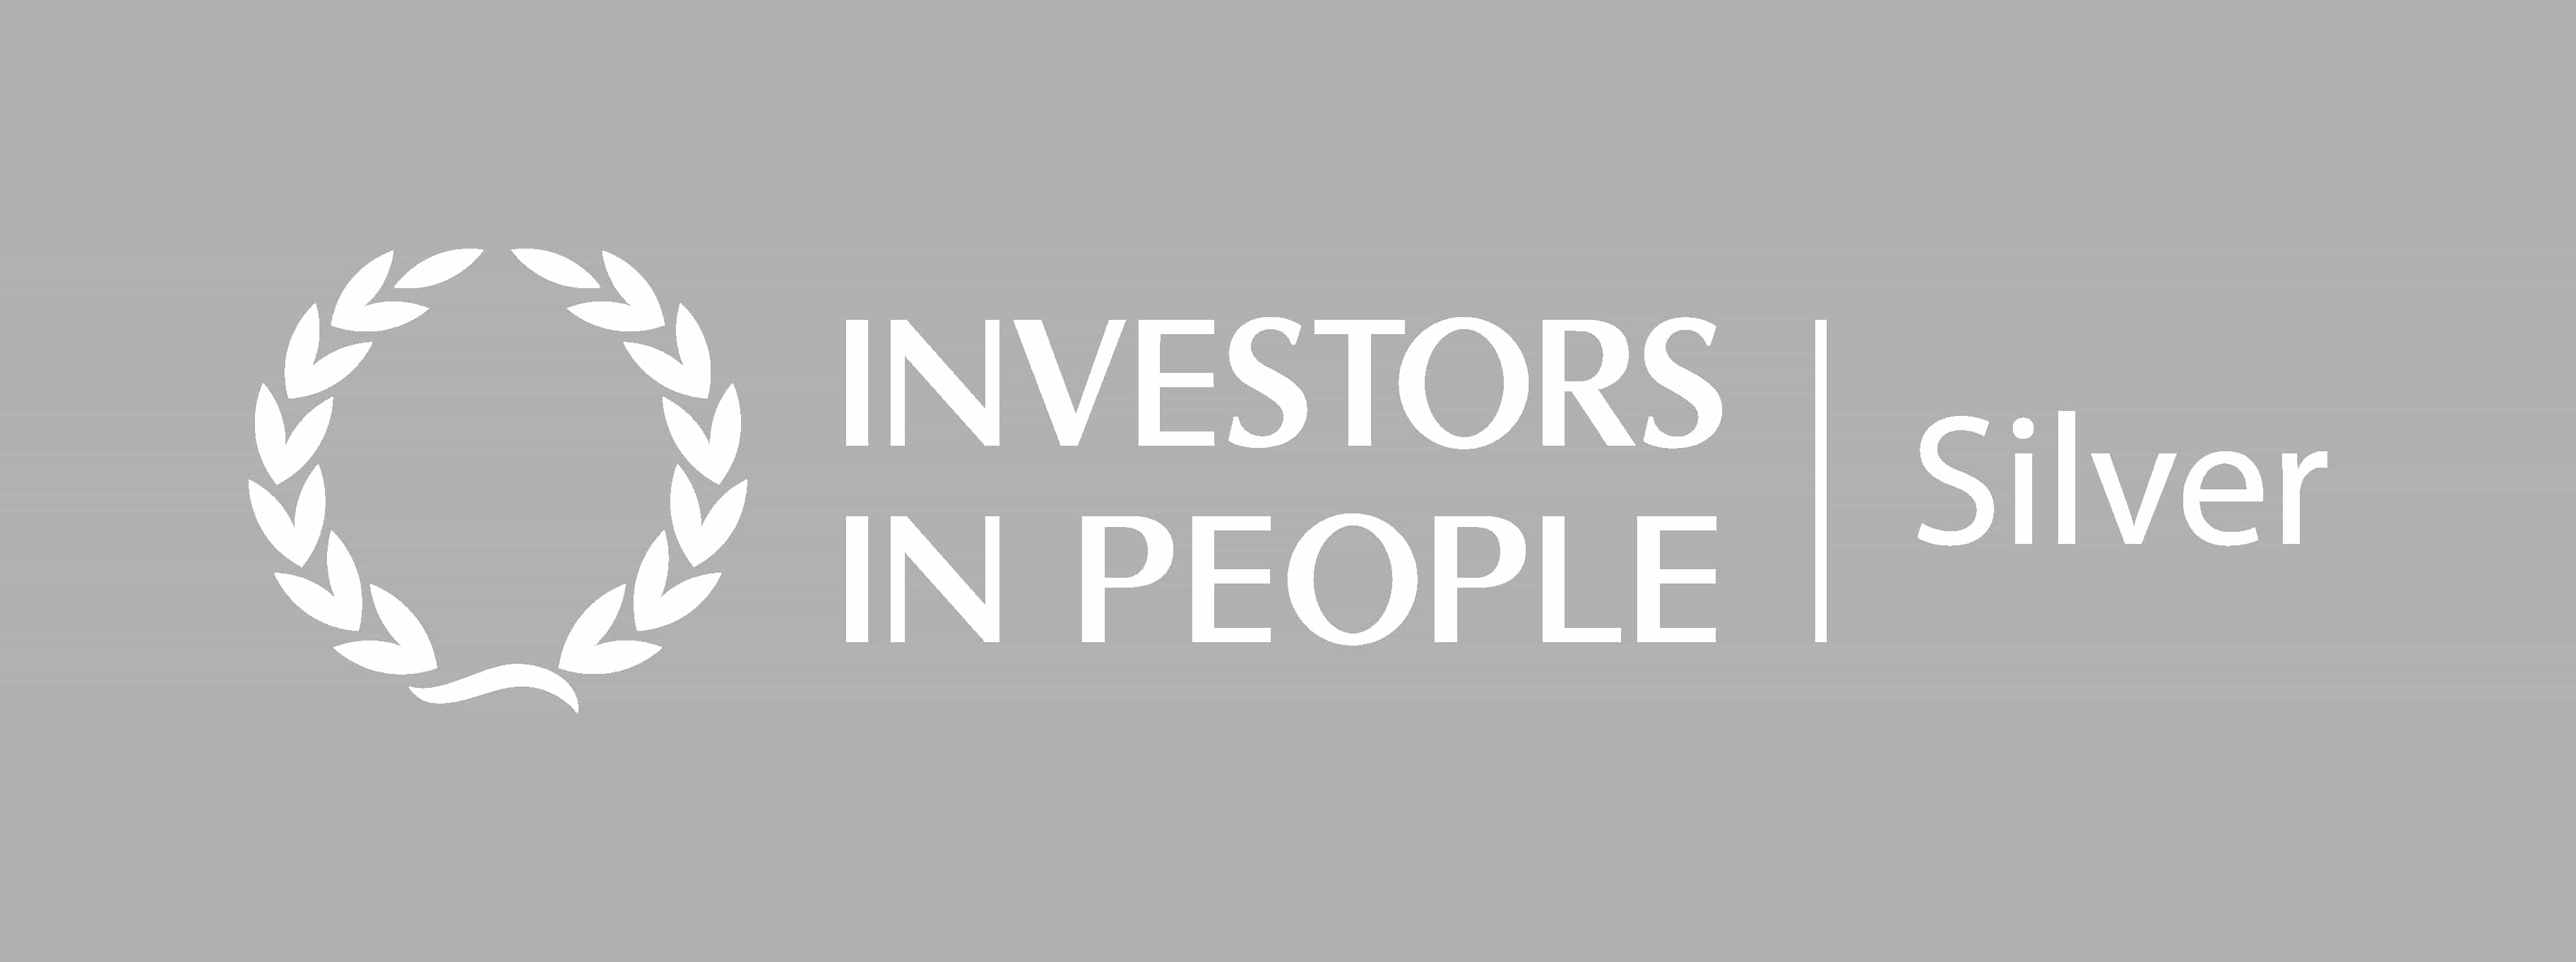 Investors in People Logo - Nacro awarded Investors in People Silver Accreditation